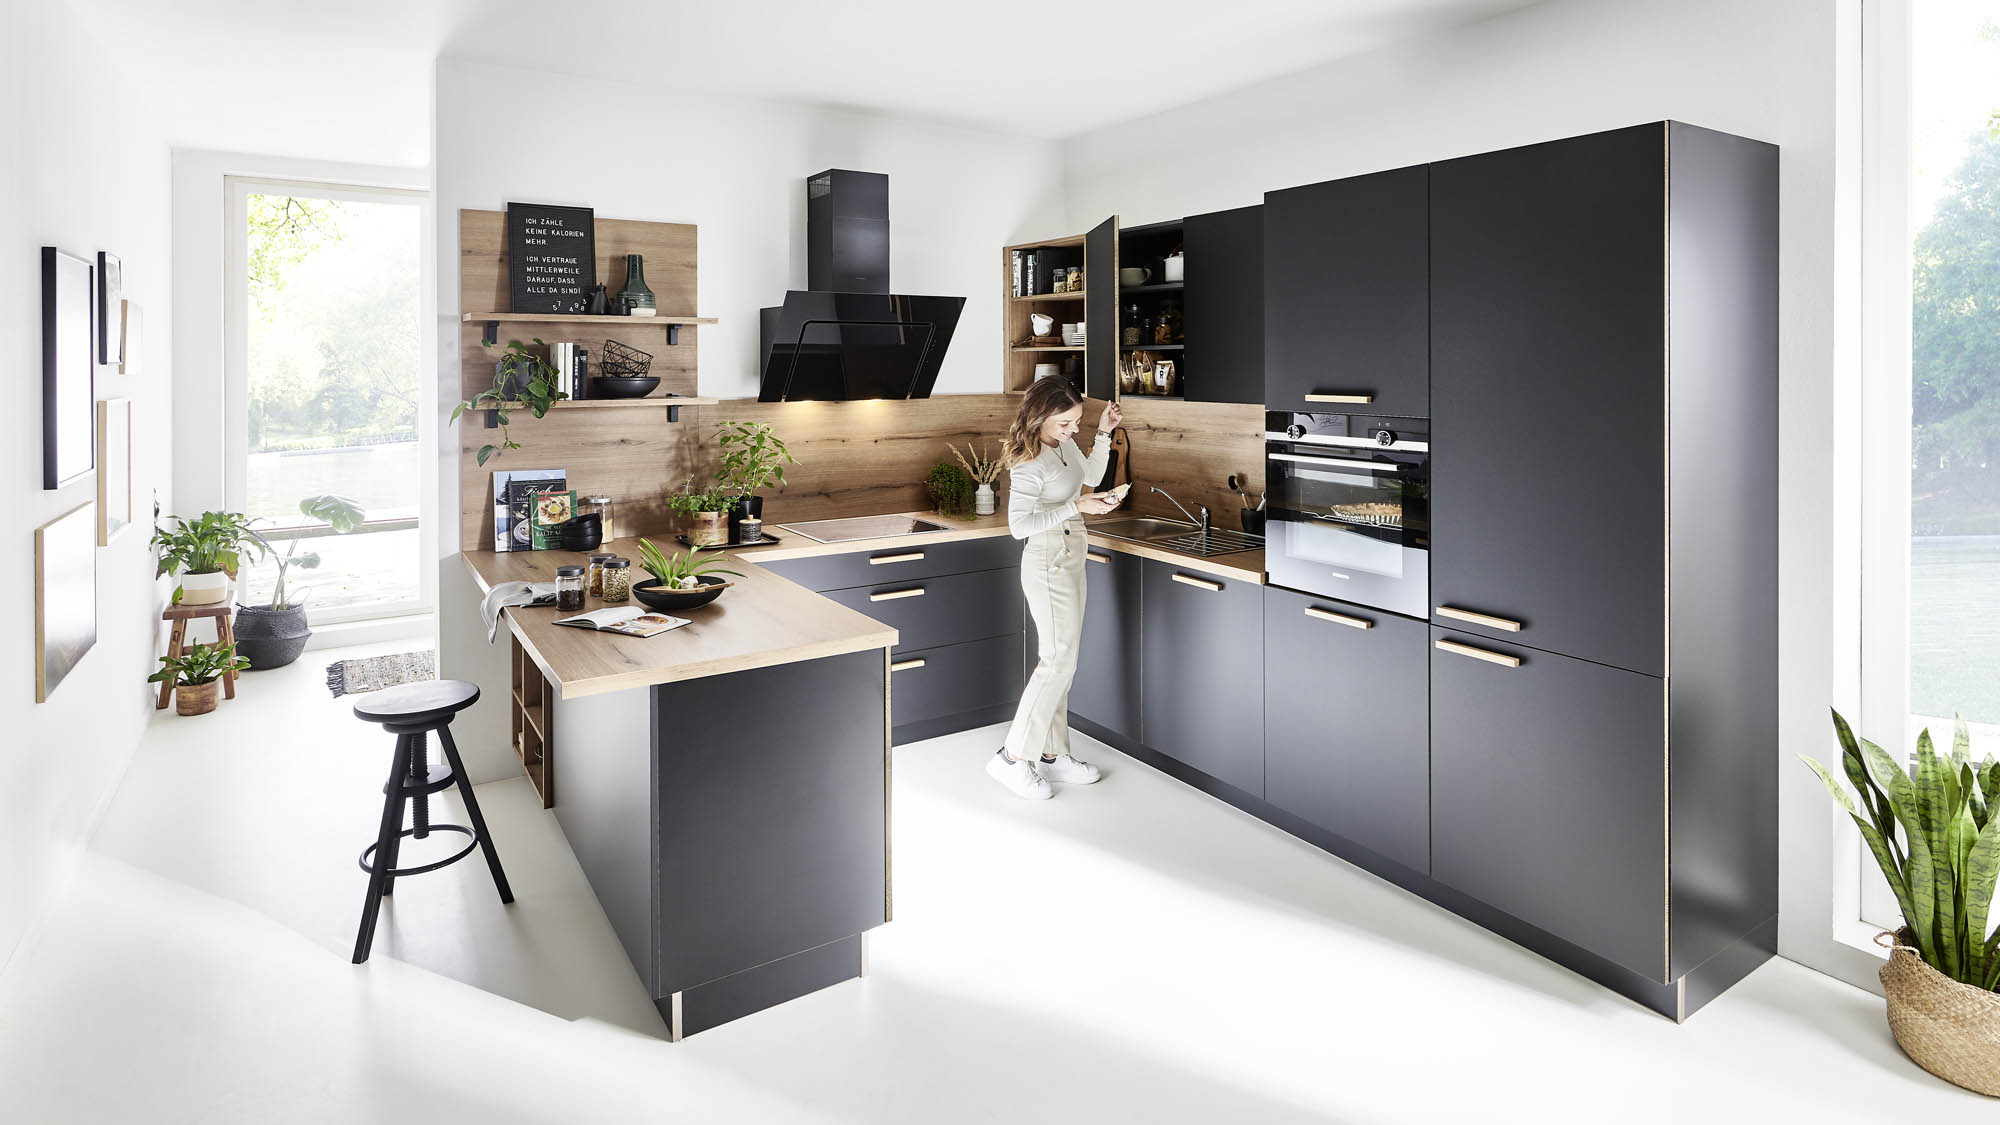 Nolte Flair Design Küche U-Form schwarz matt / Holzoptik 